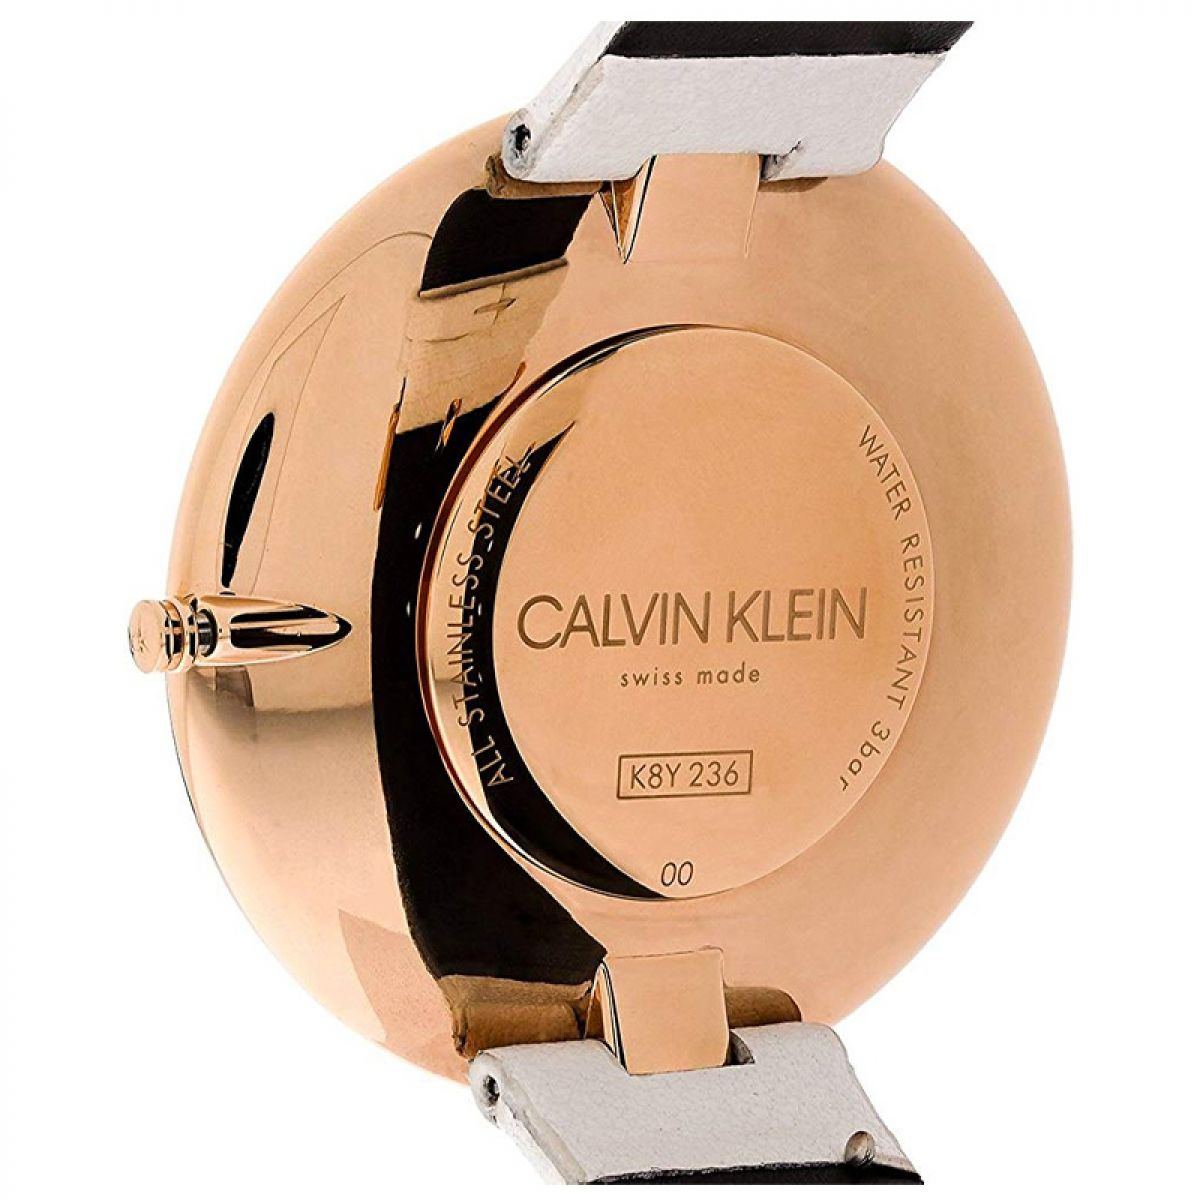 Calvin Klein Swiss-Made Full Moon K8Y236L6